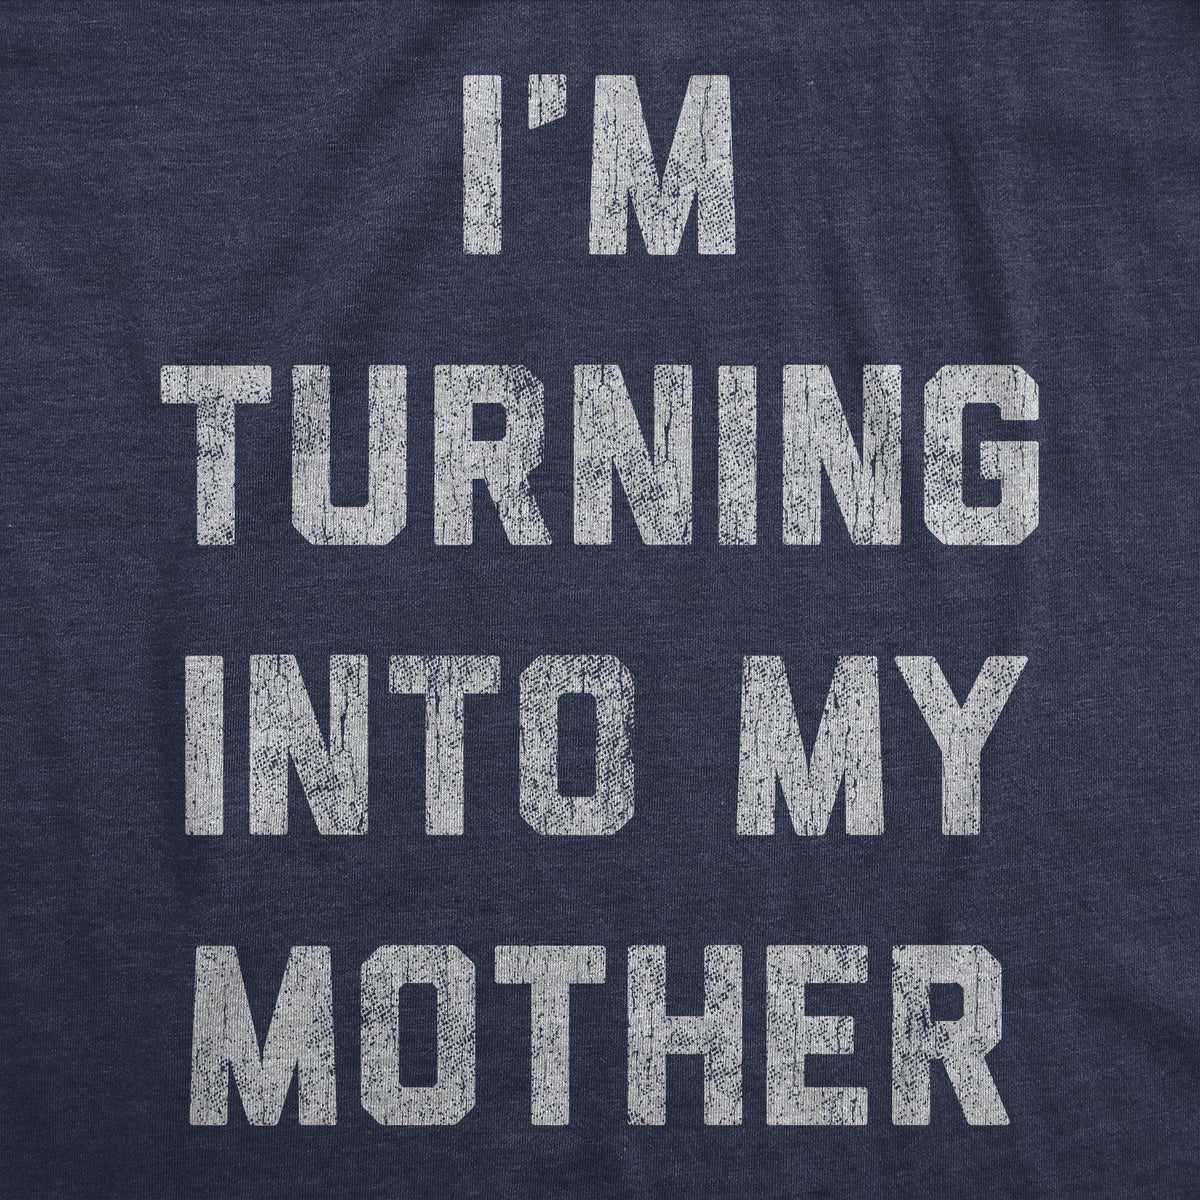 I&#39;m Turning Into My Mother Women&#39;s Tshirt - Crazy Dog T-Shirts